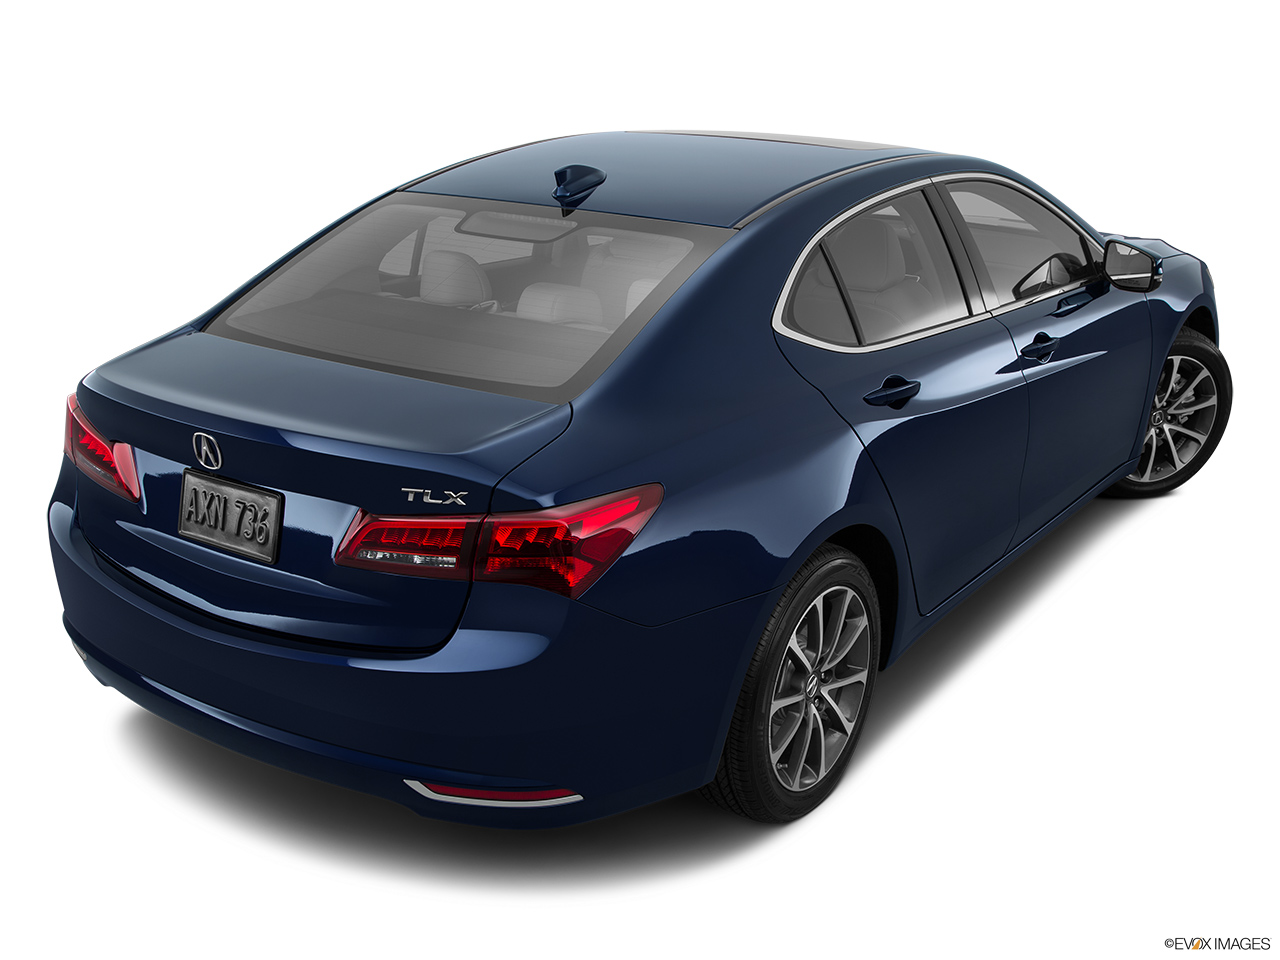 2015 Acura TLX 3.5 V-6 9-AT P-AWS Rear 3/4 angle view. 